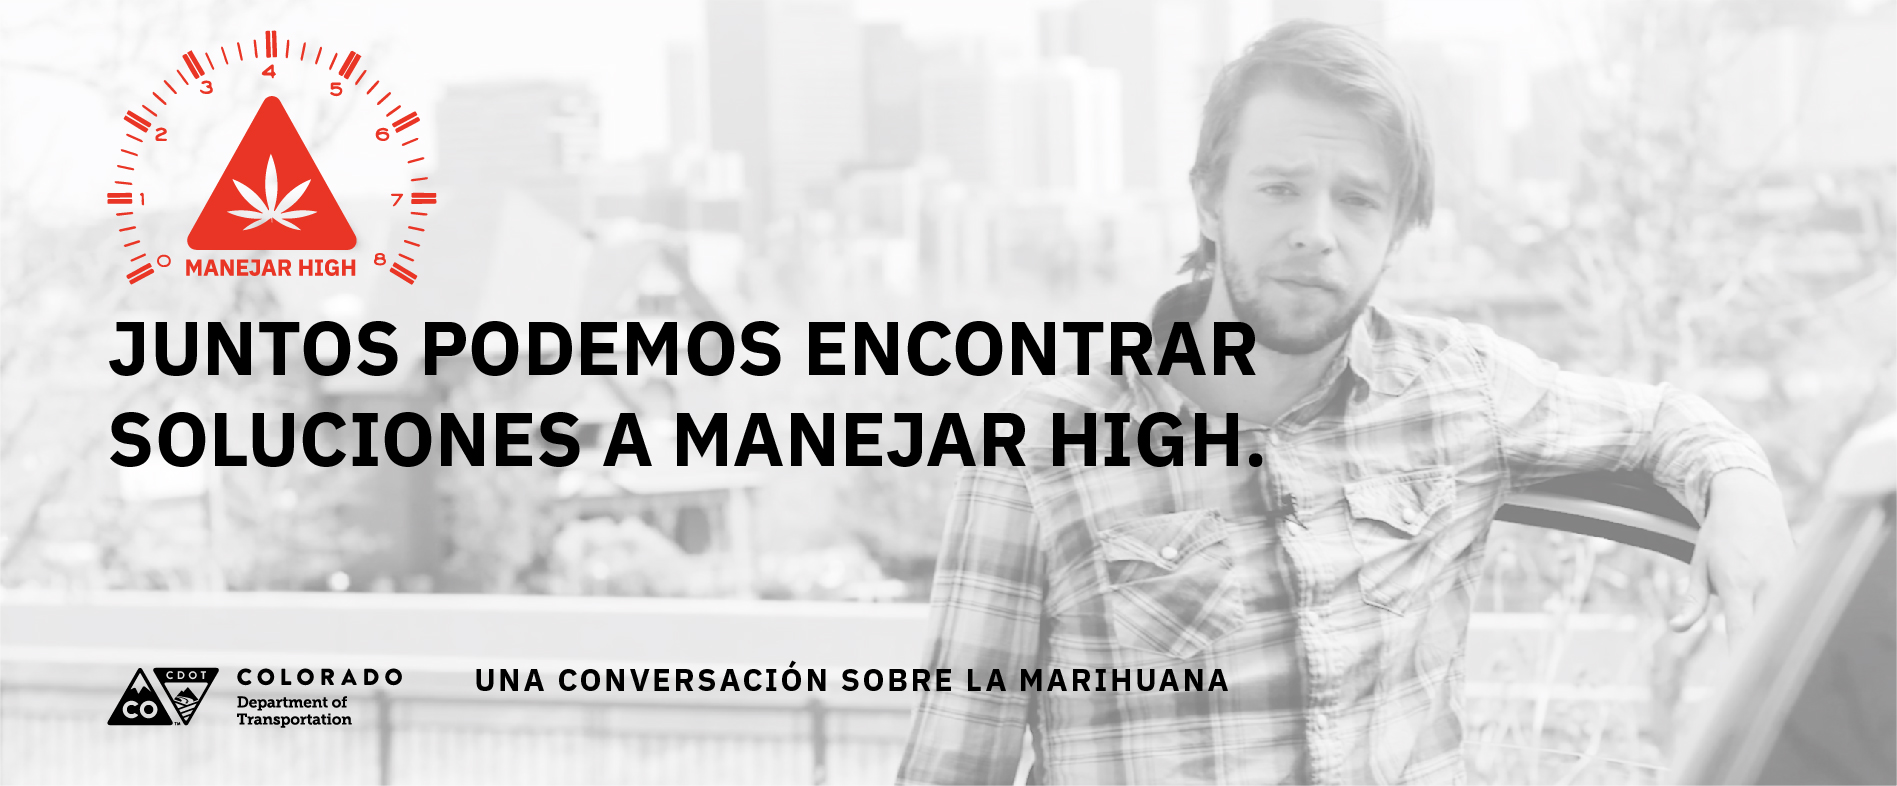 CD038_CannabisConversations_GraphicKit_Mech_v1_Spanish_Horizontal_B.jpg detail image